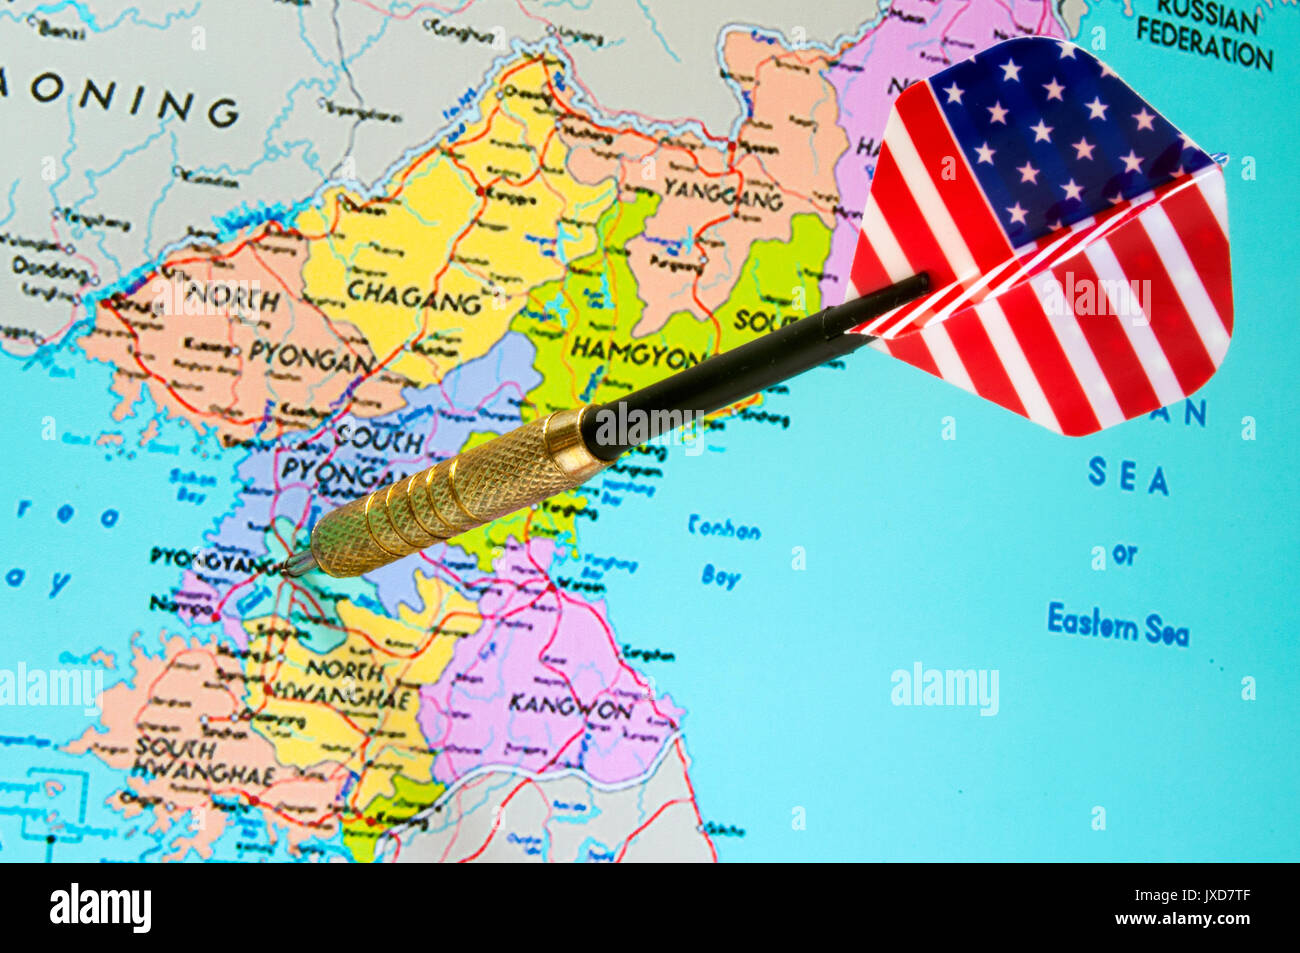 Dart with American flag motif striking Pyongyang on map of North Korea Stock Photo